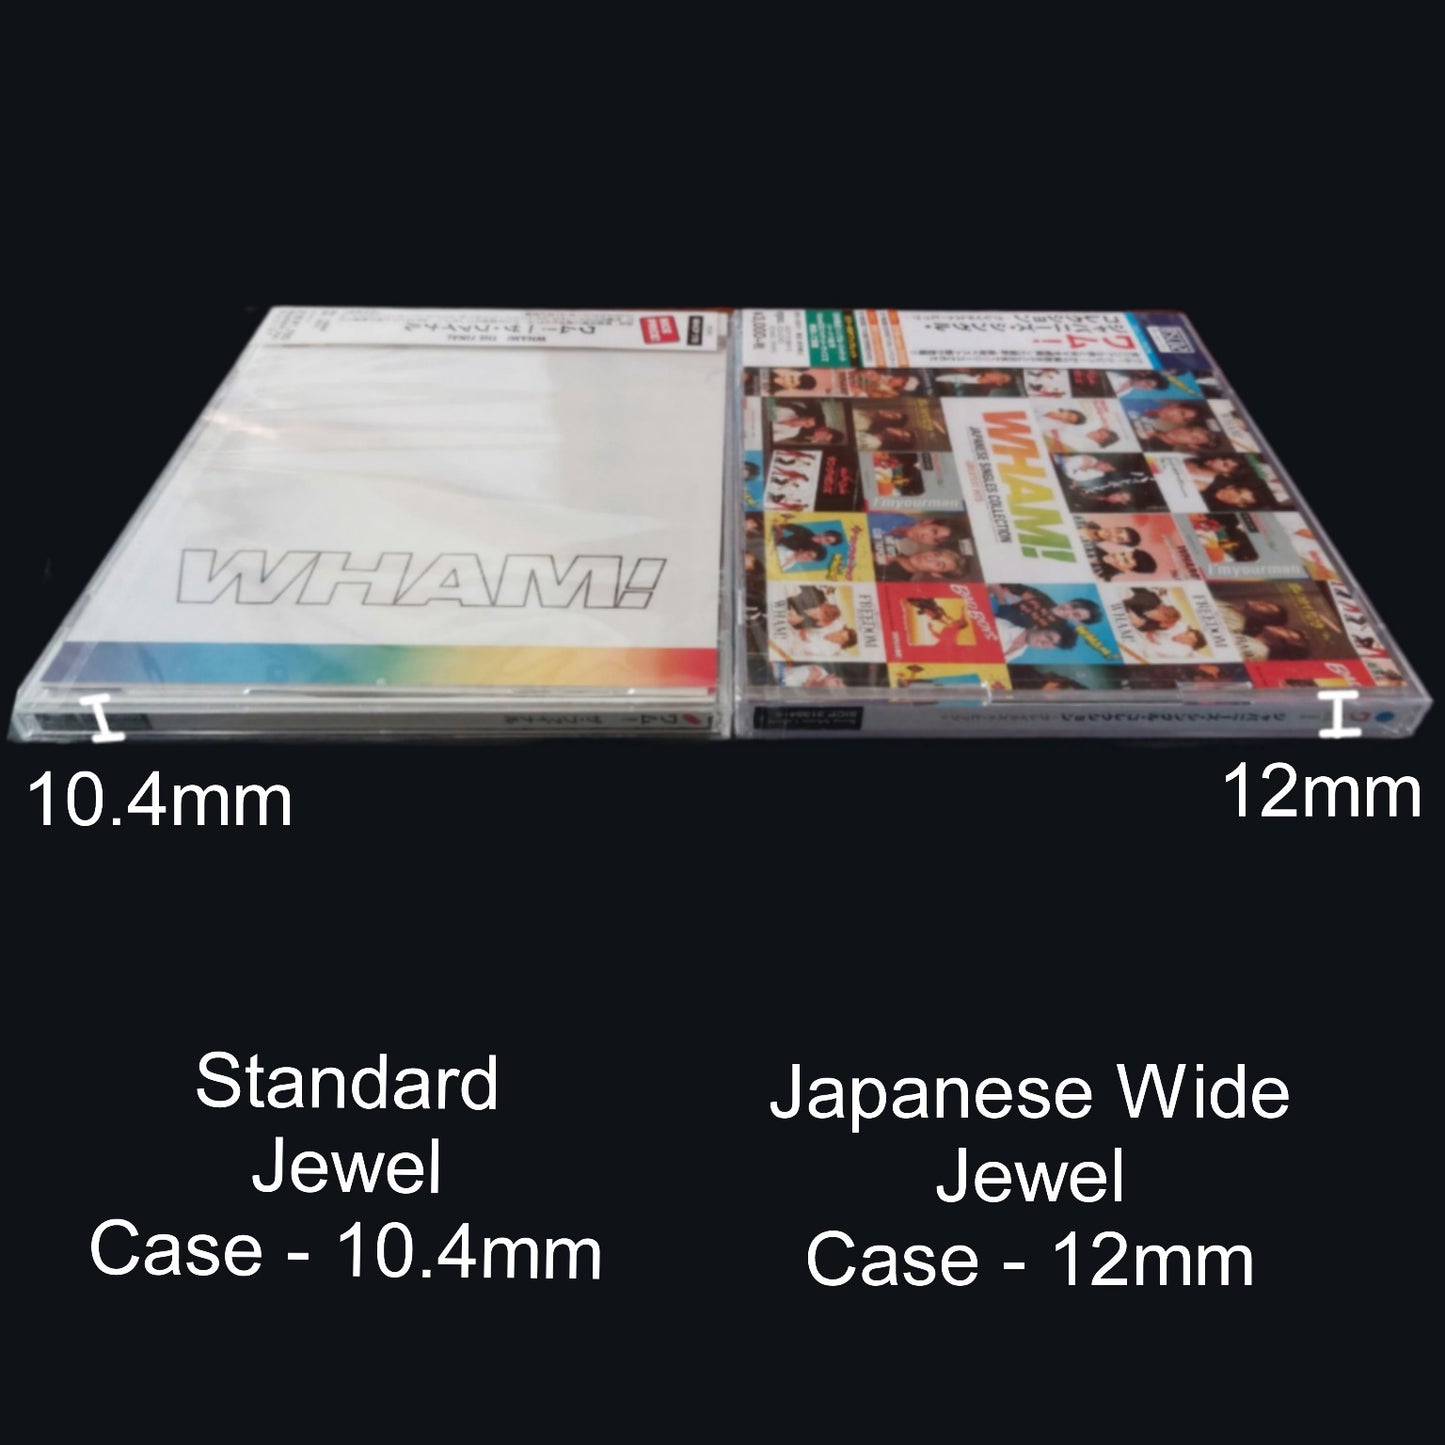 CD_Jewel_Japanese_Wide_12mm_Case_Comparison